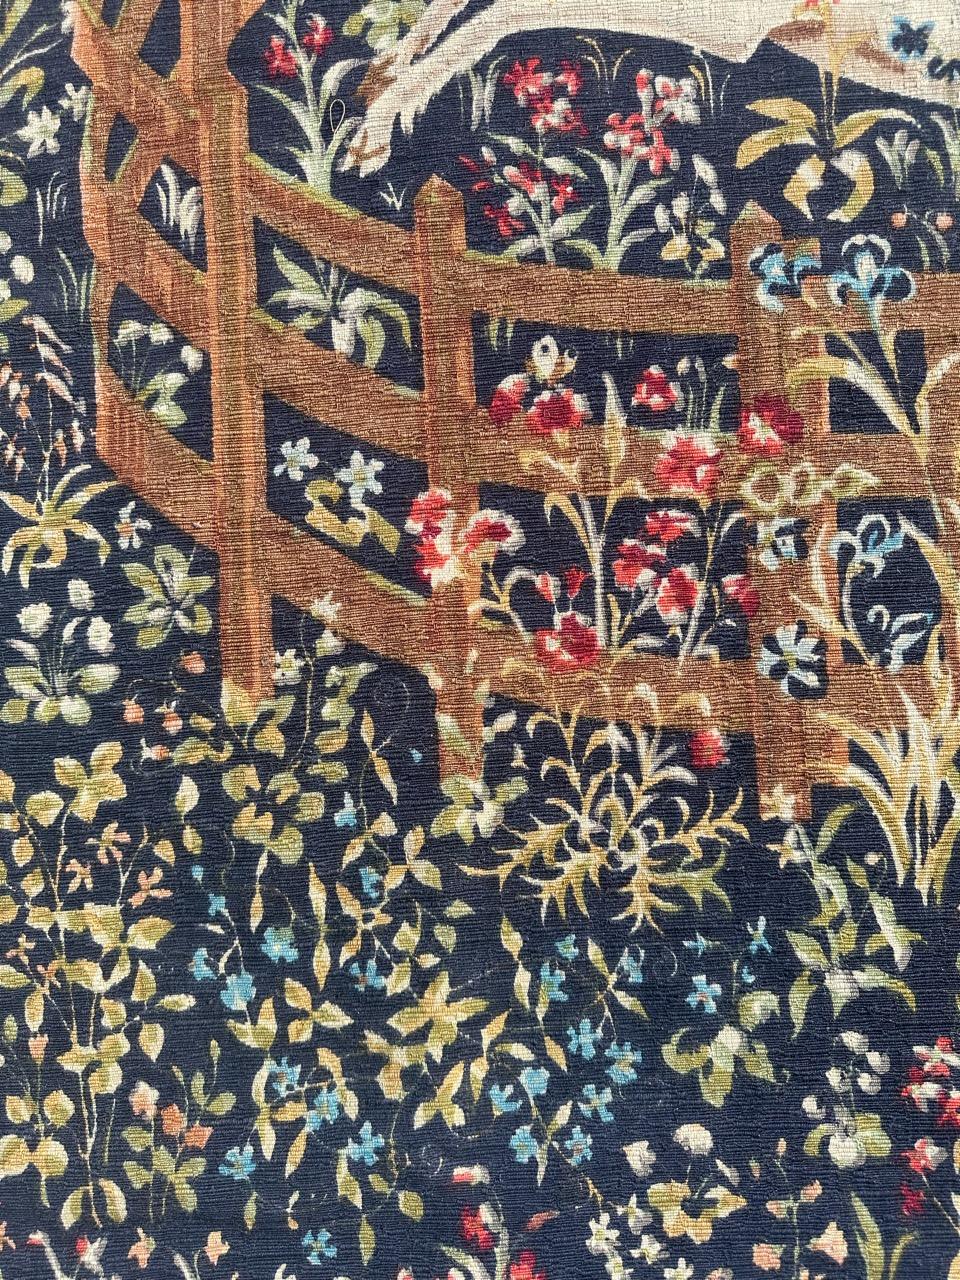 Medieval Bobyrug’s Wonderful Vintage French hand printed Tapestry « licorne captive » For Sale